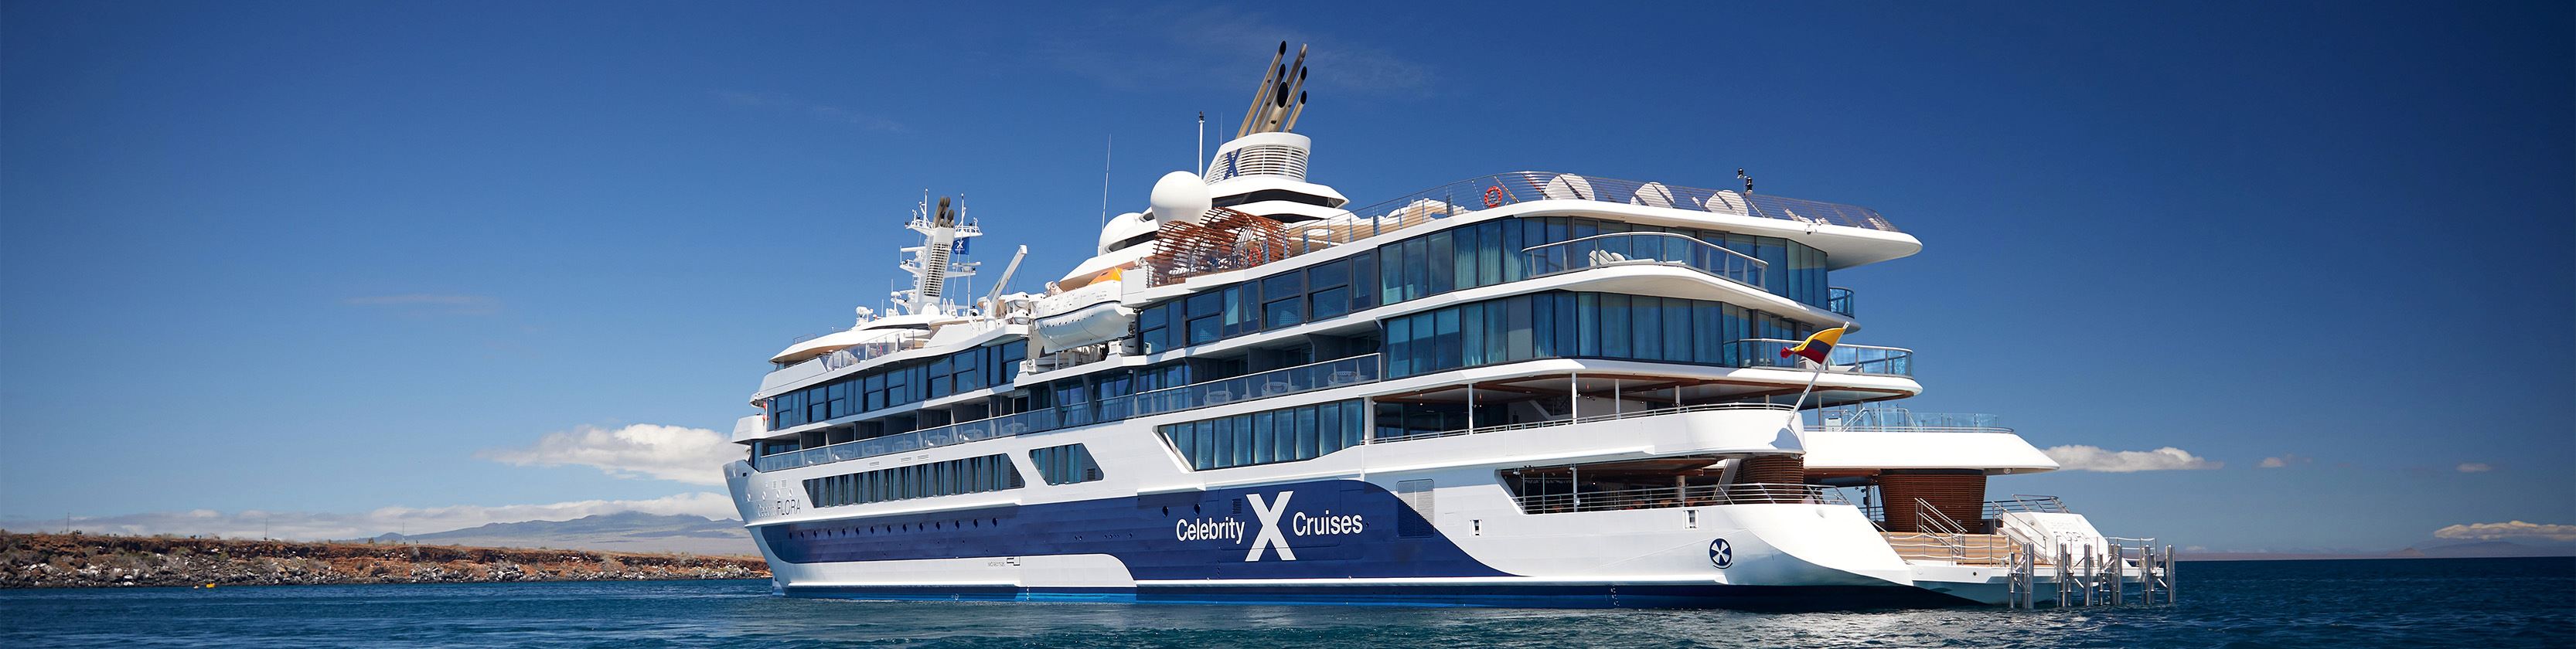 celebrity-cruises-1